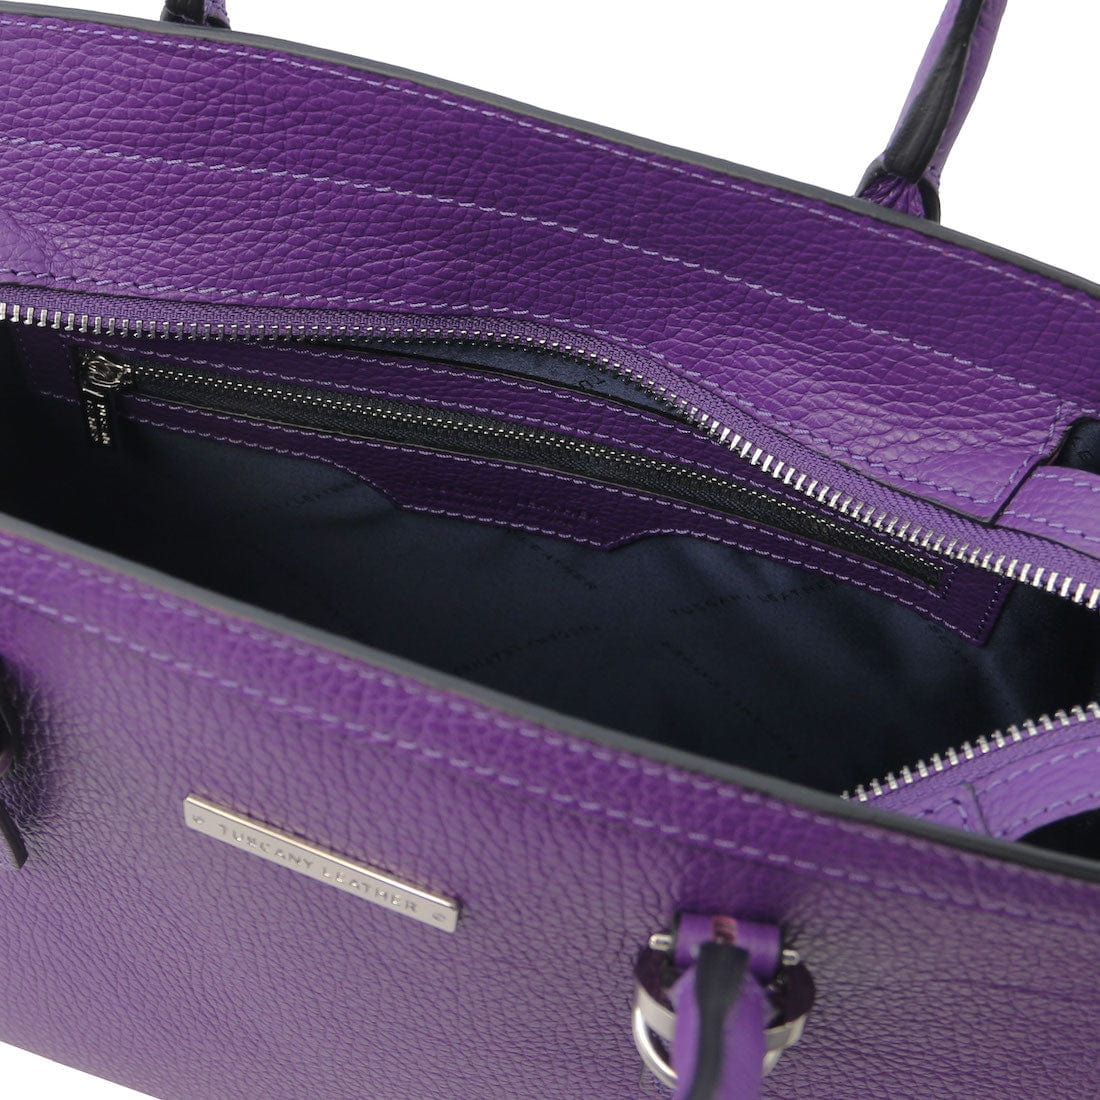 TL Bag - Leather handbag | TL142147 - Premium Leather handbags - Shop now at San Rocco Italia